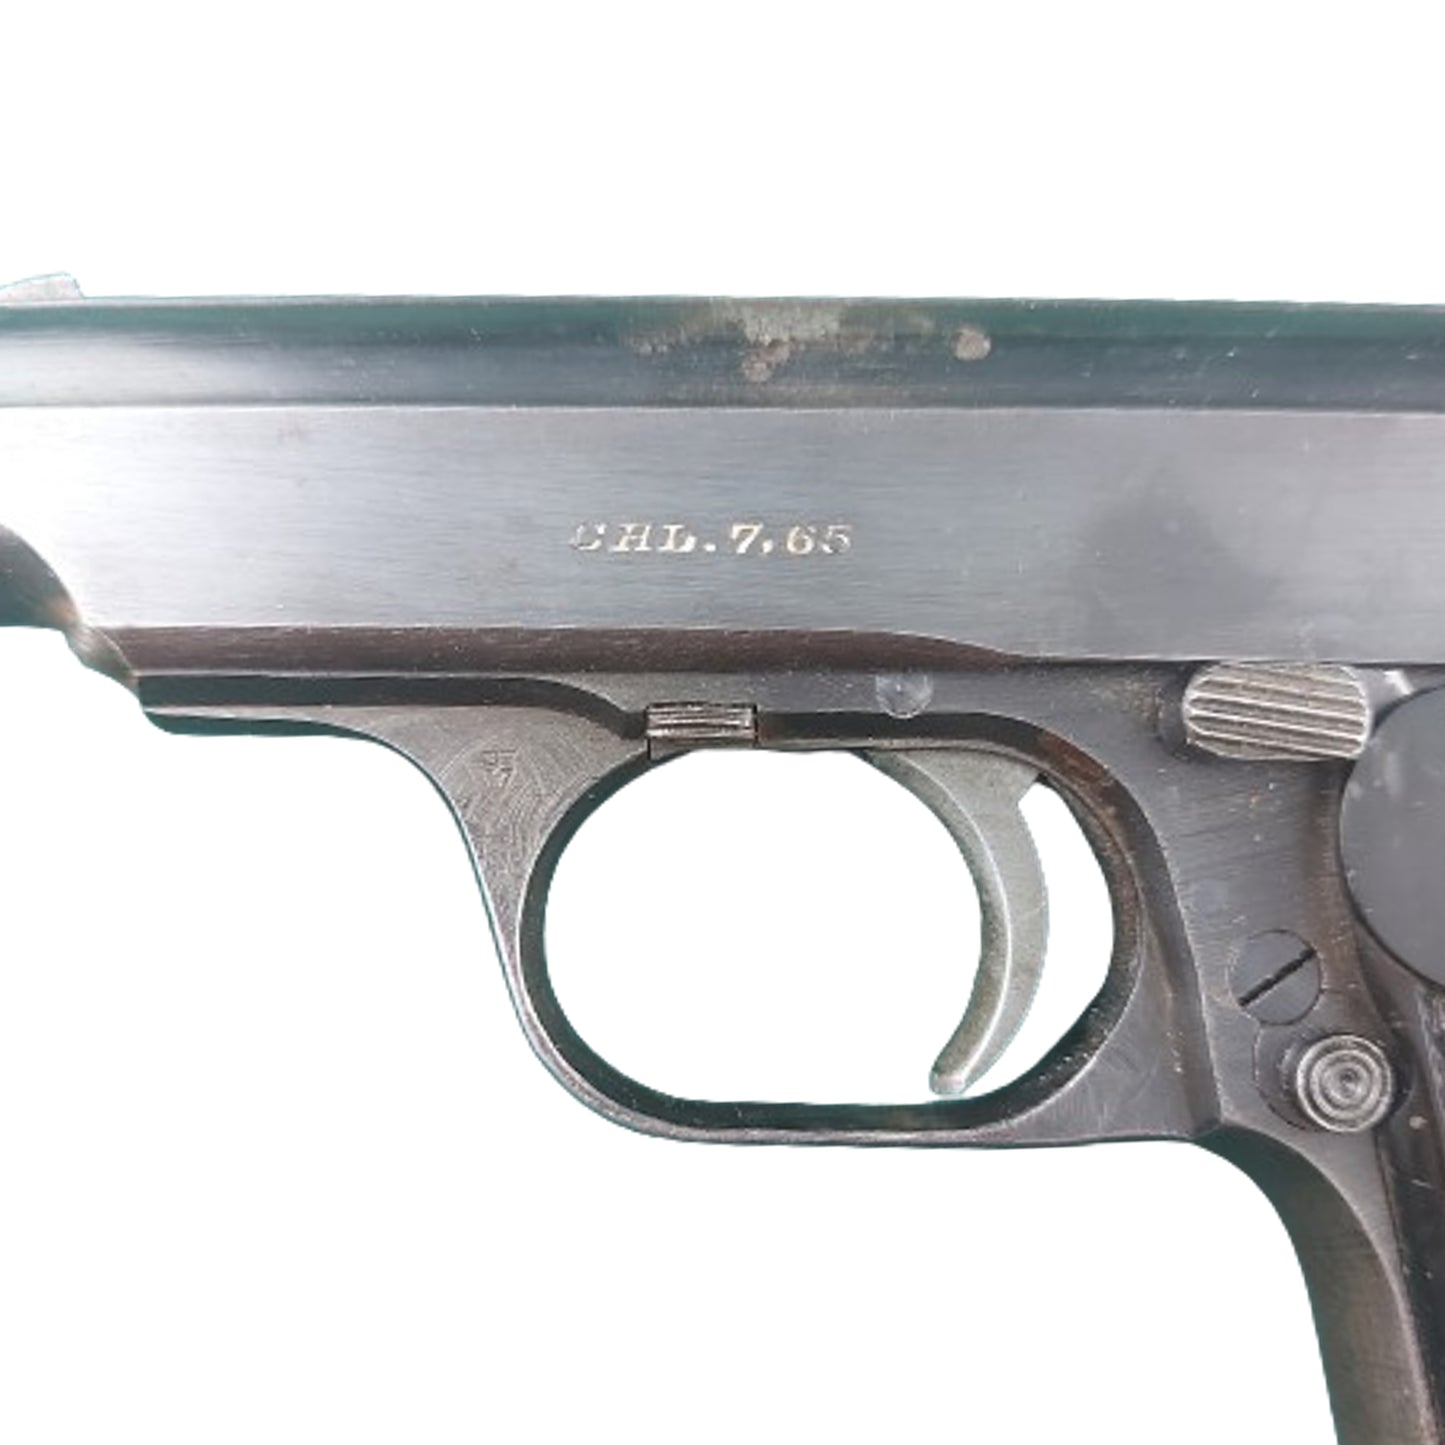 Deactivated WW2 German Sauer Model 38H Service Pistol